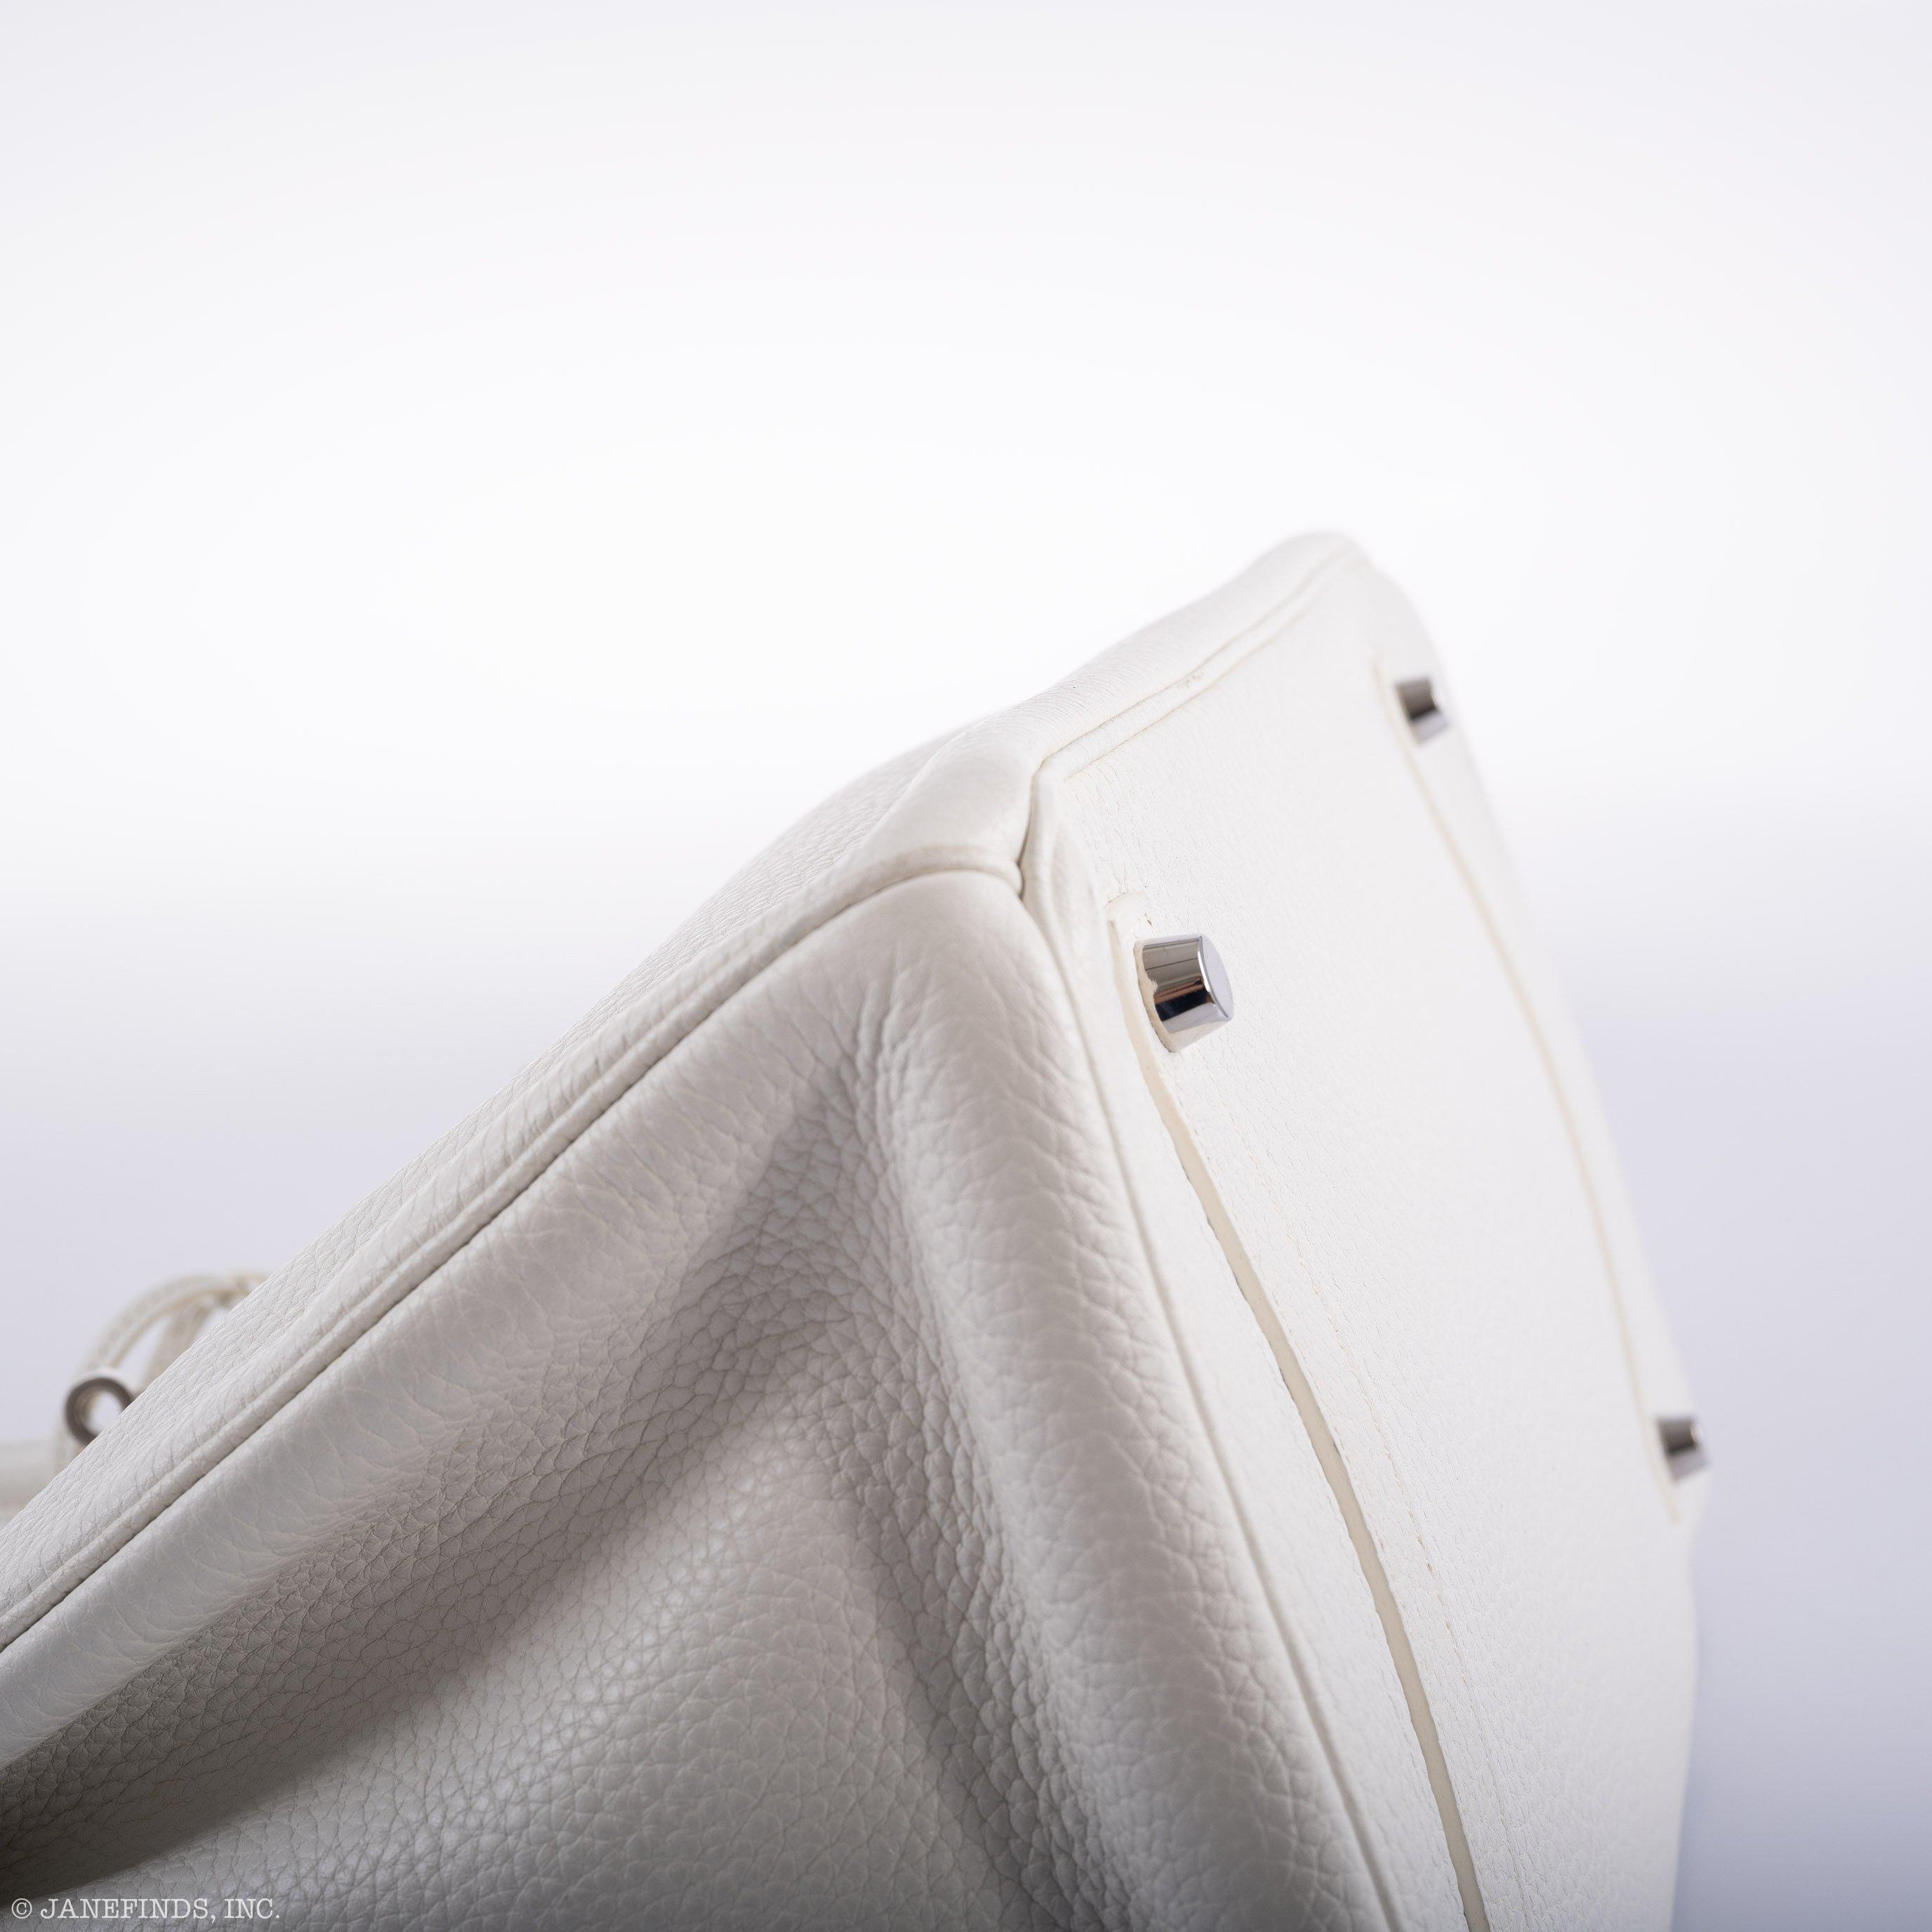 Hermès Birkin 35 White Clemence leather Palladium Hardware - N Square